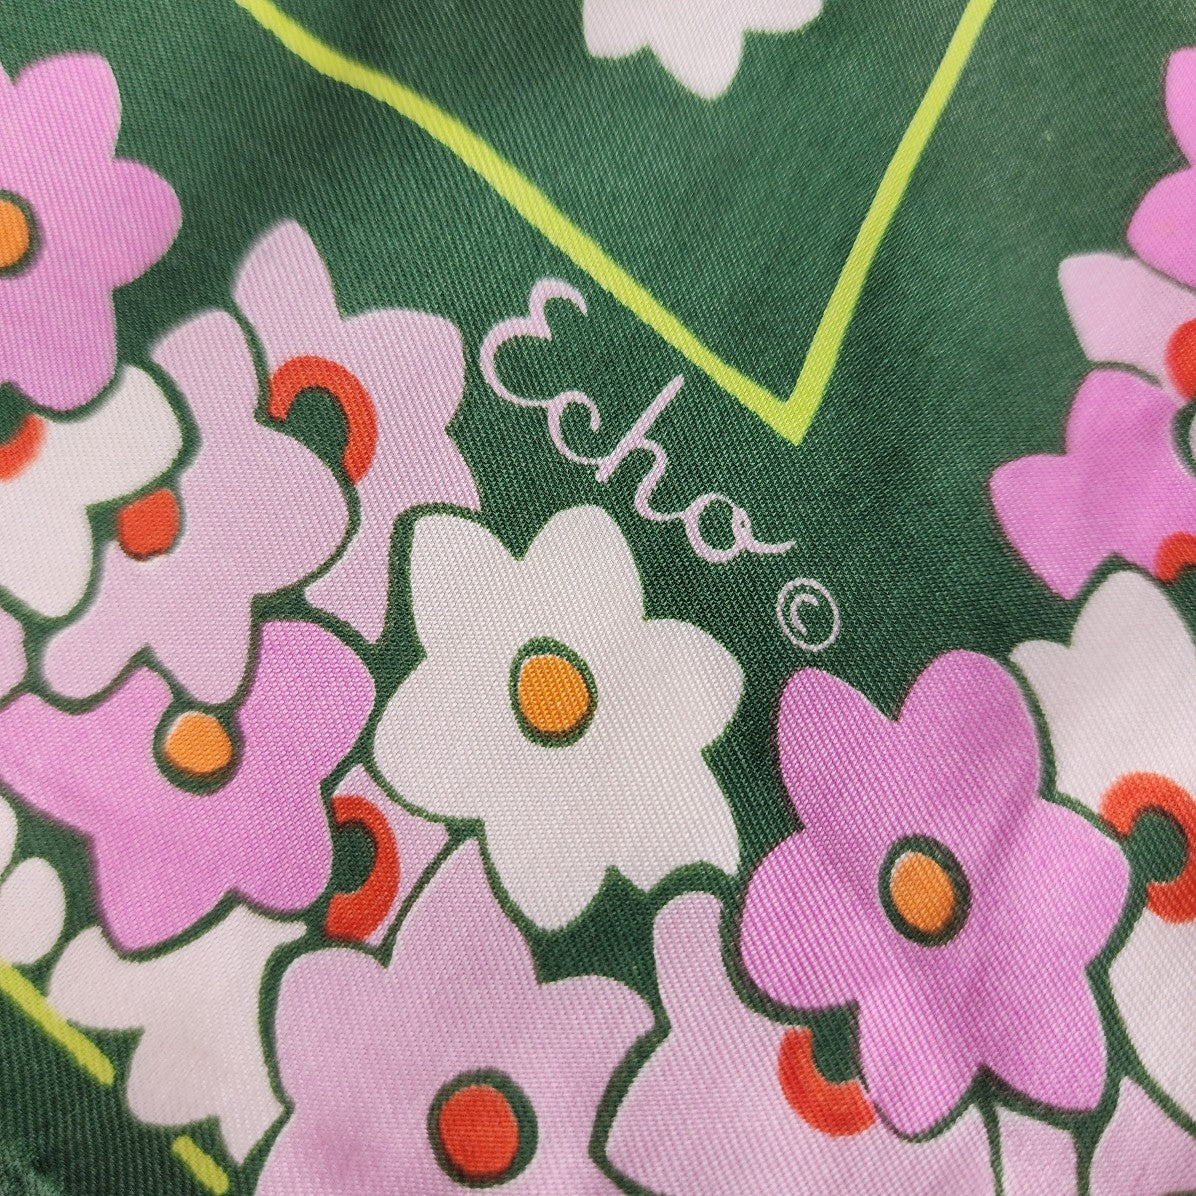 Vintage Echo Green & Pink Floral Square Scarf